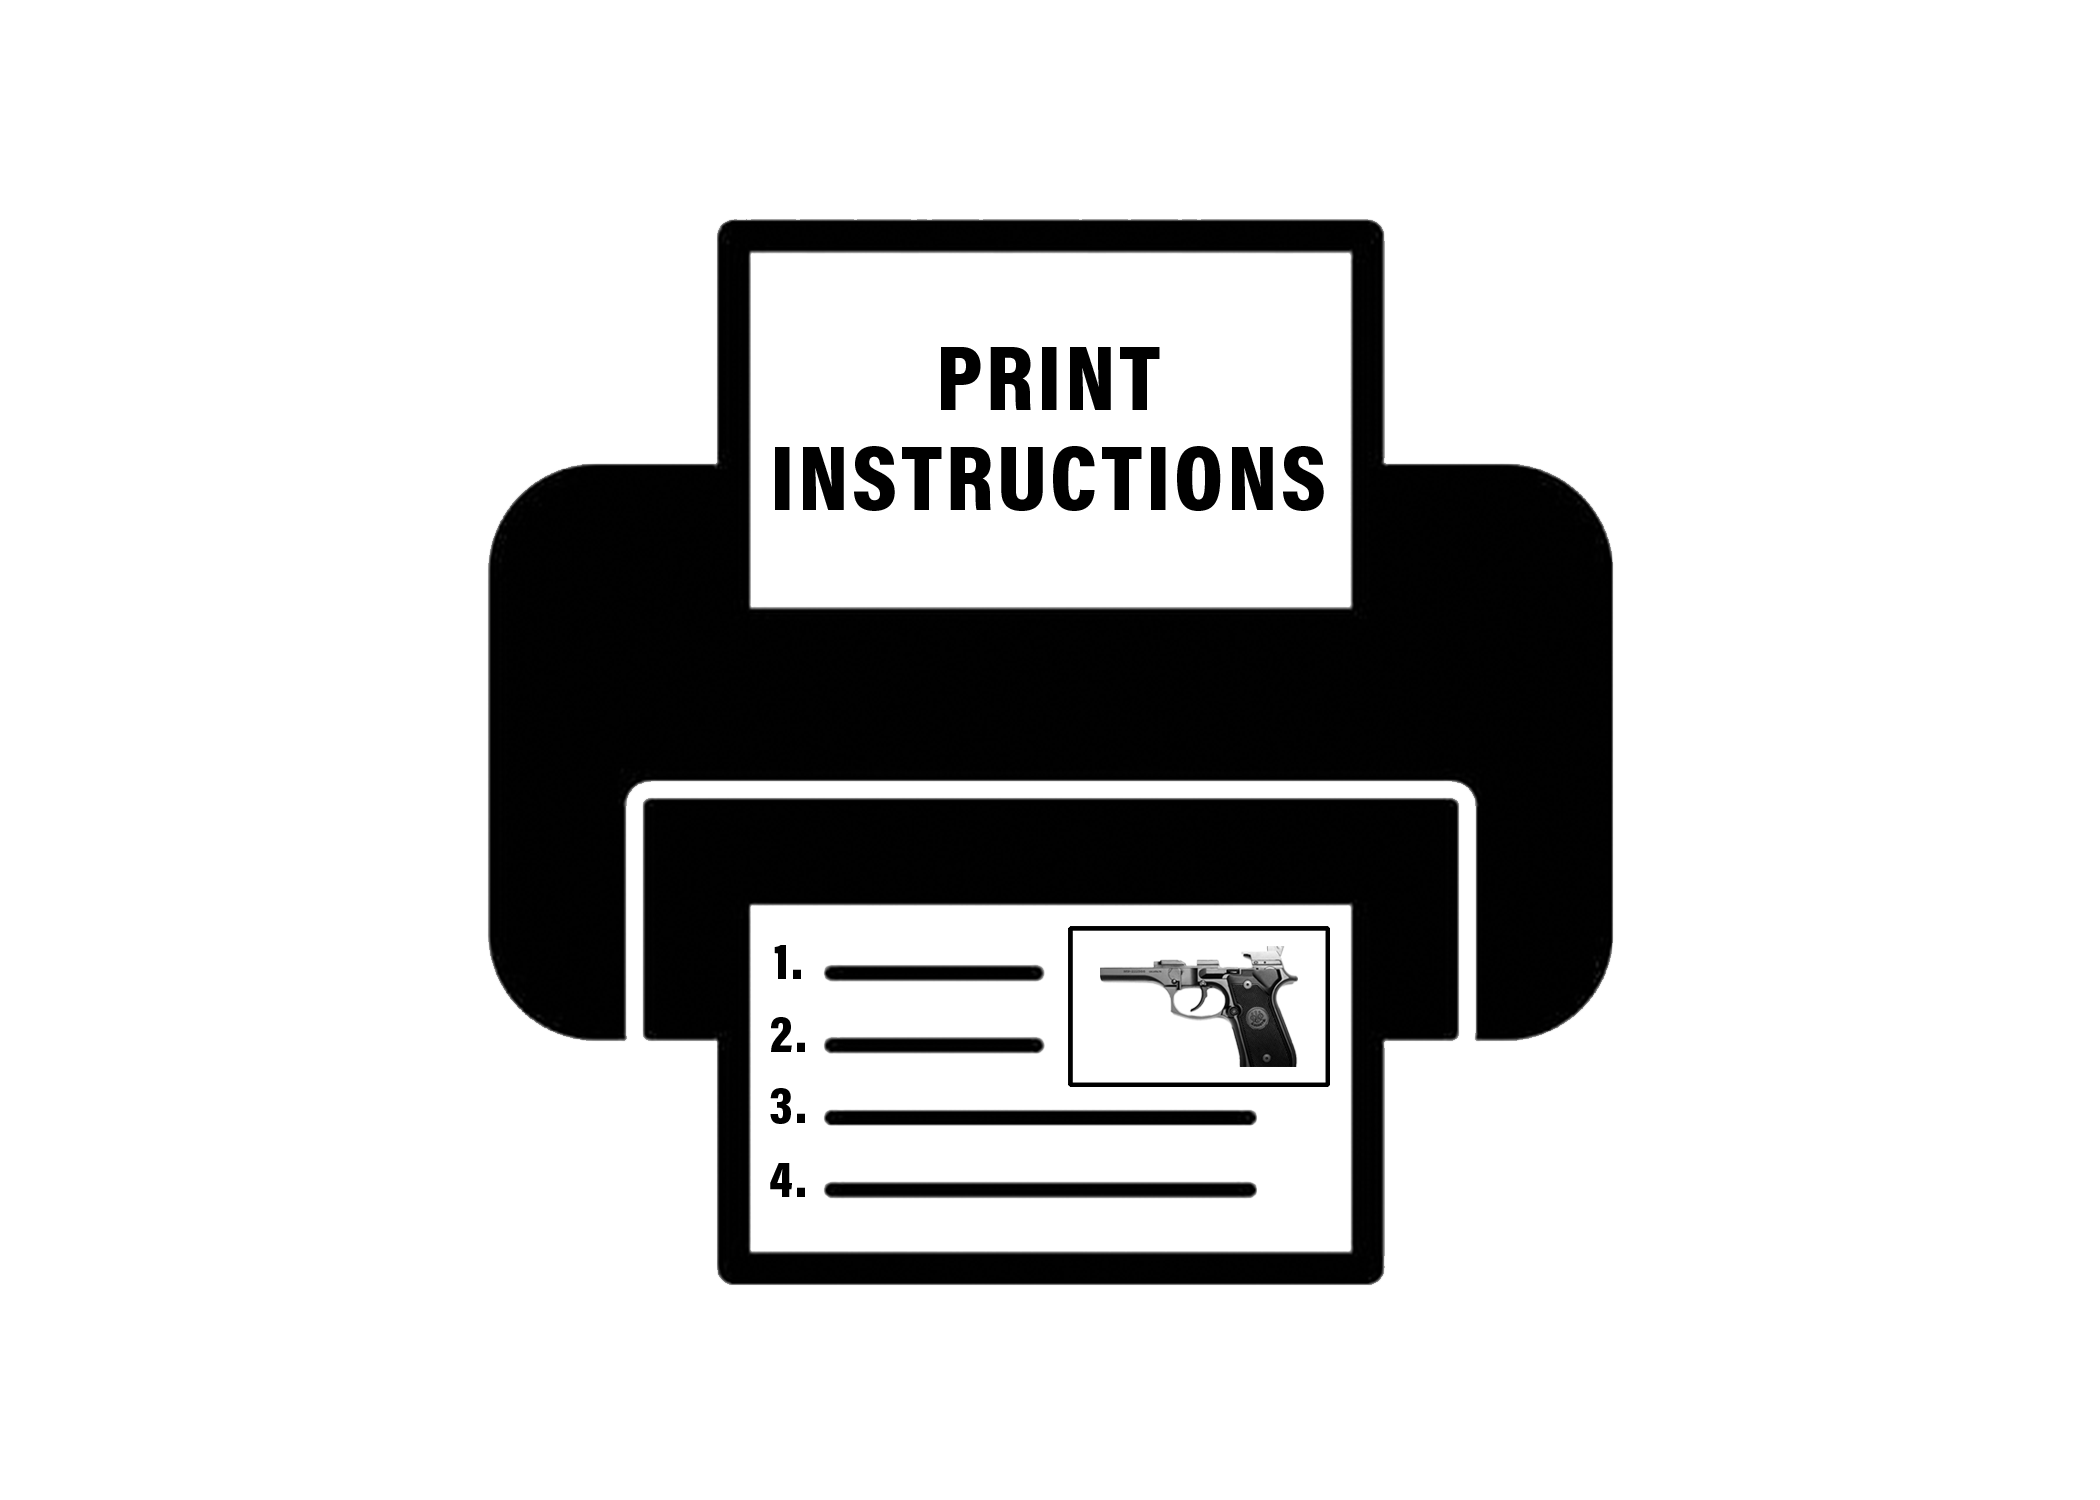 Savage 64 Trigger Spring Kit Printable Instructions